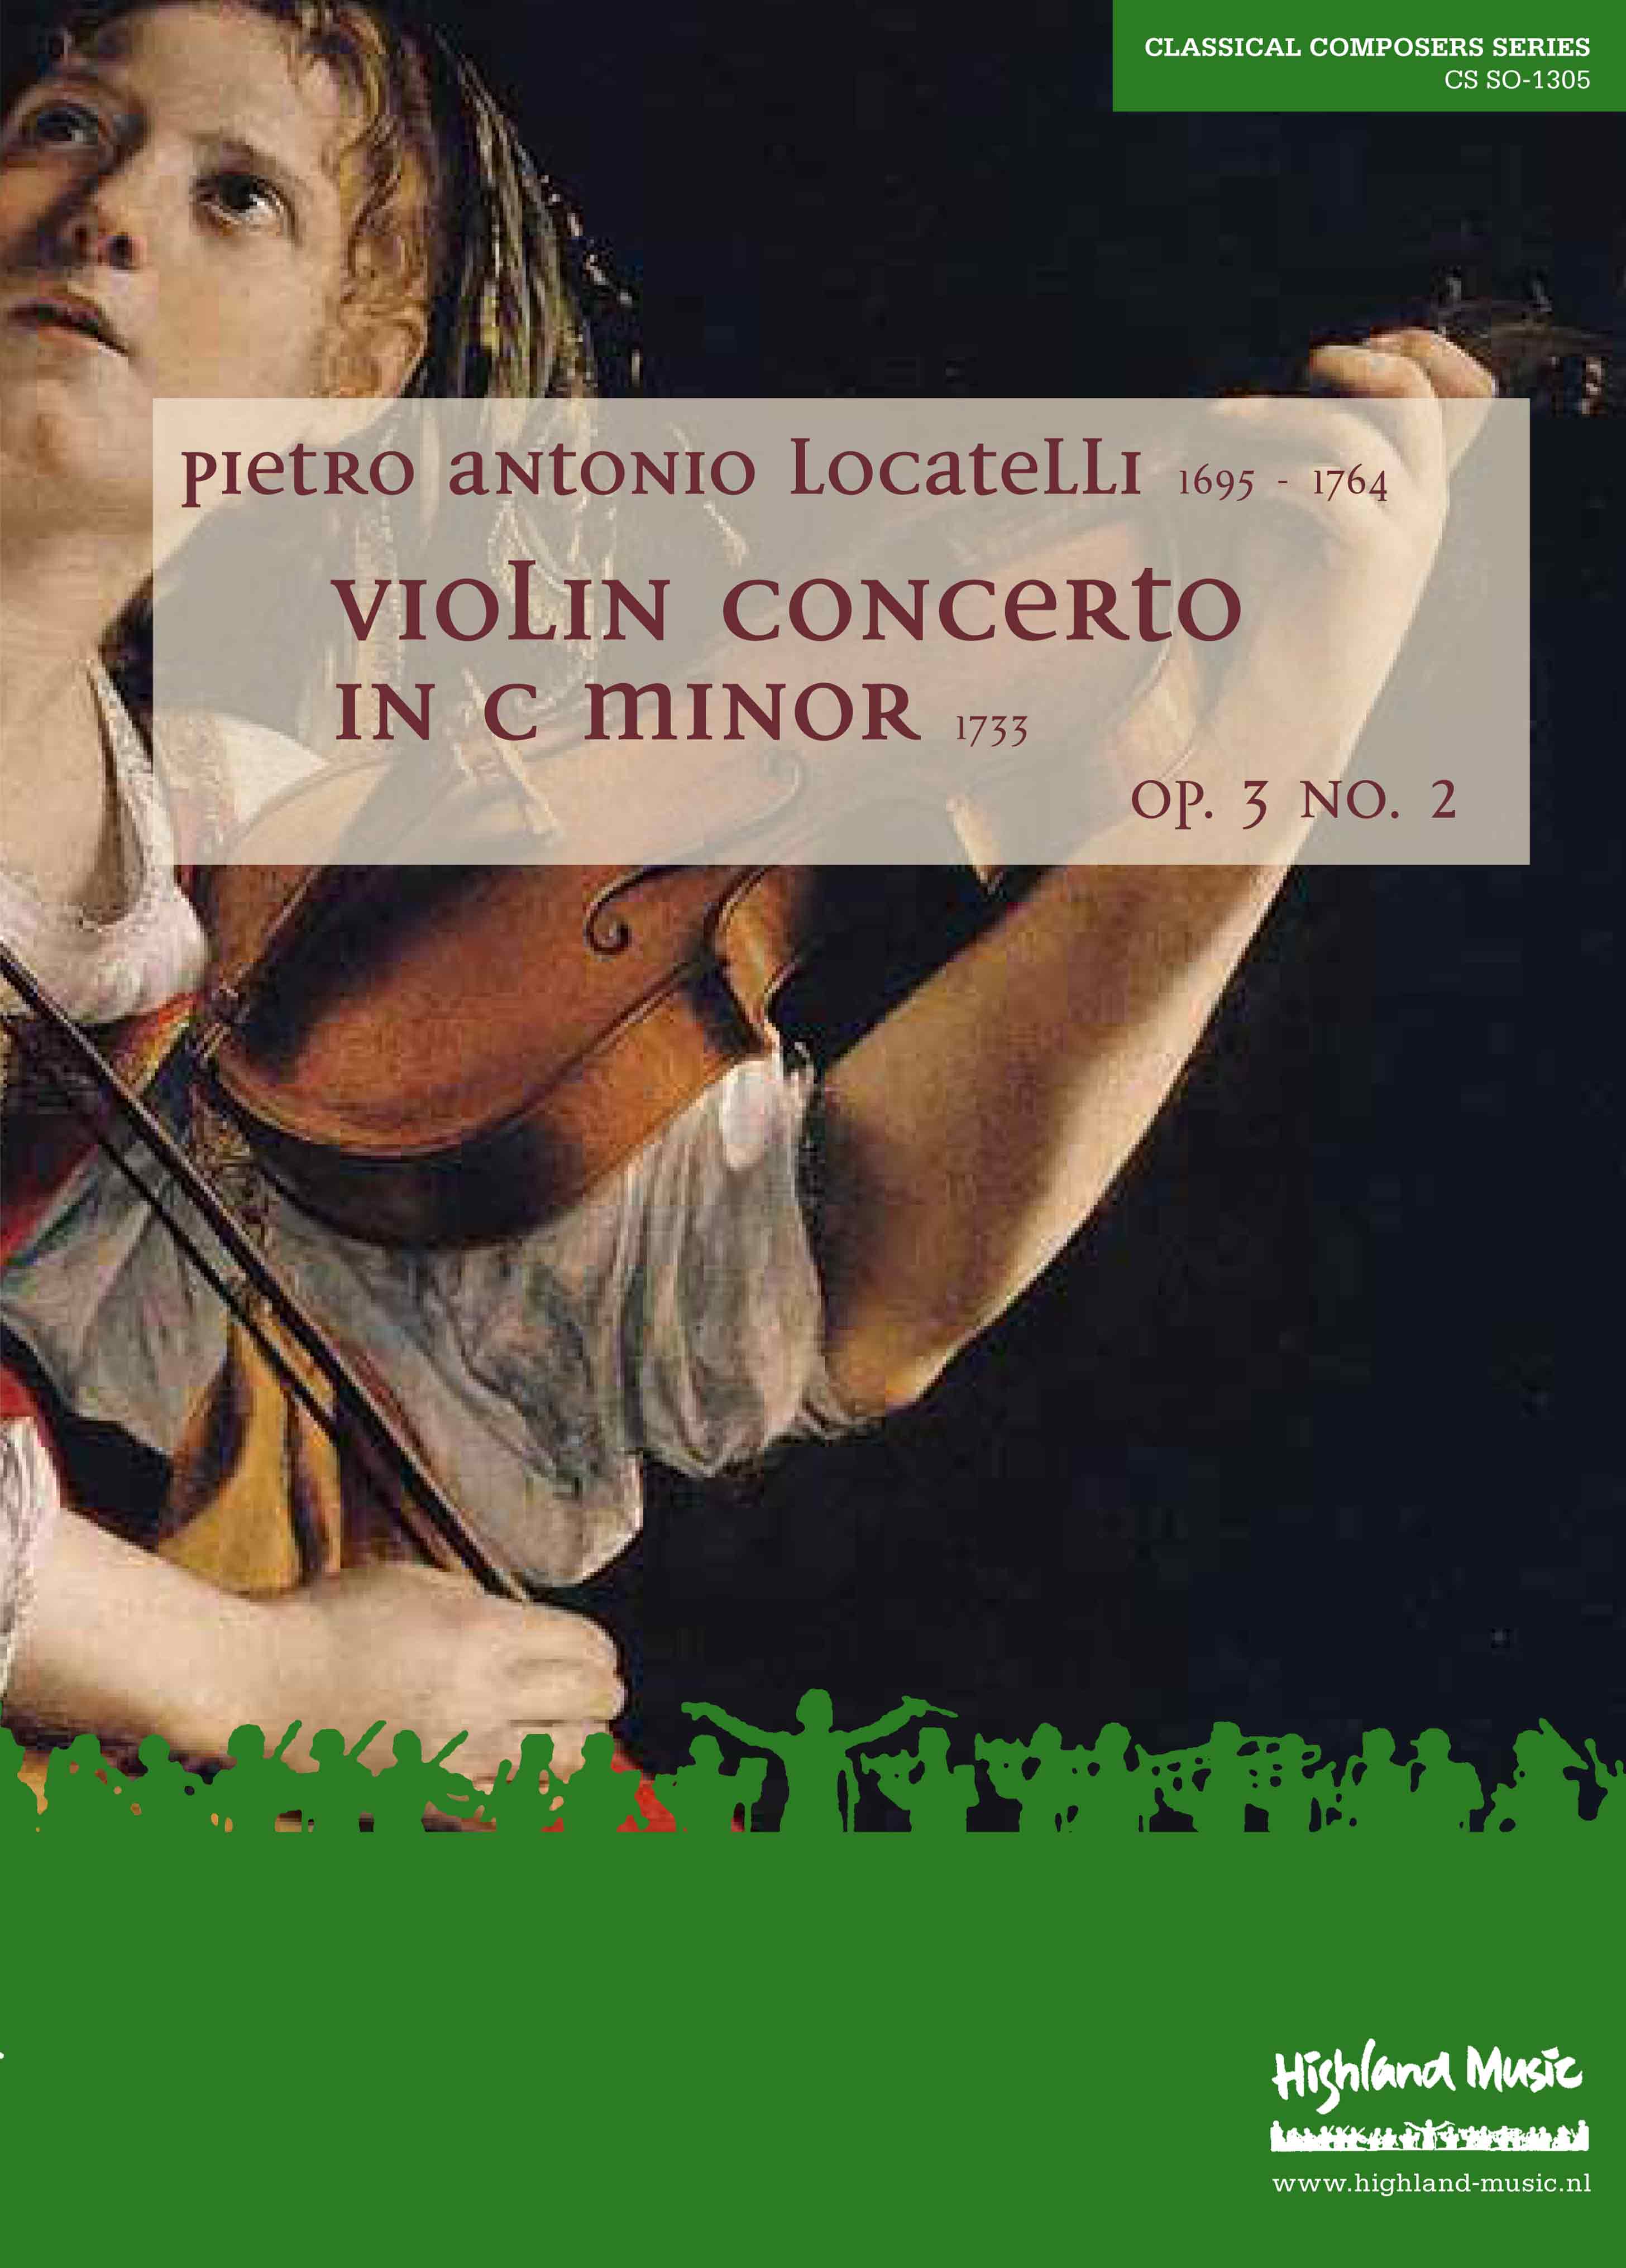 Pietro Antonio Locatelli - Violin Concerto op.3 No.2 in c